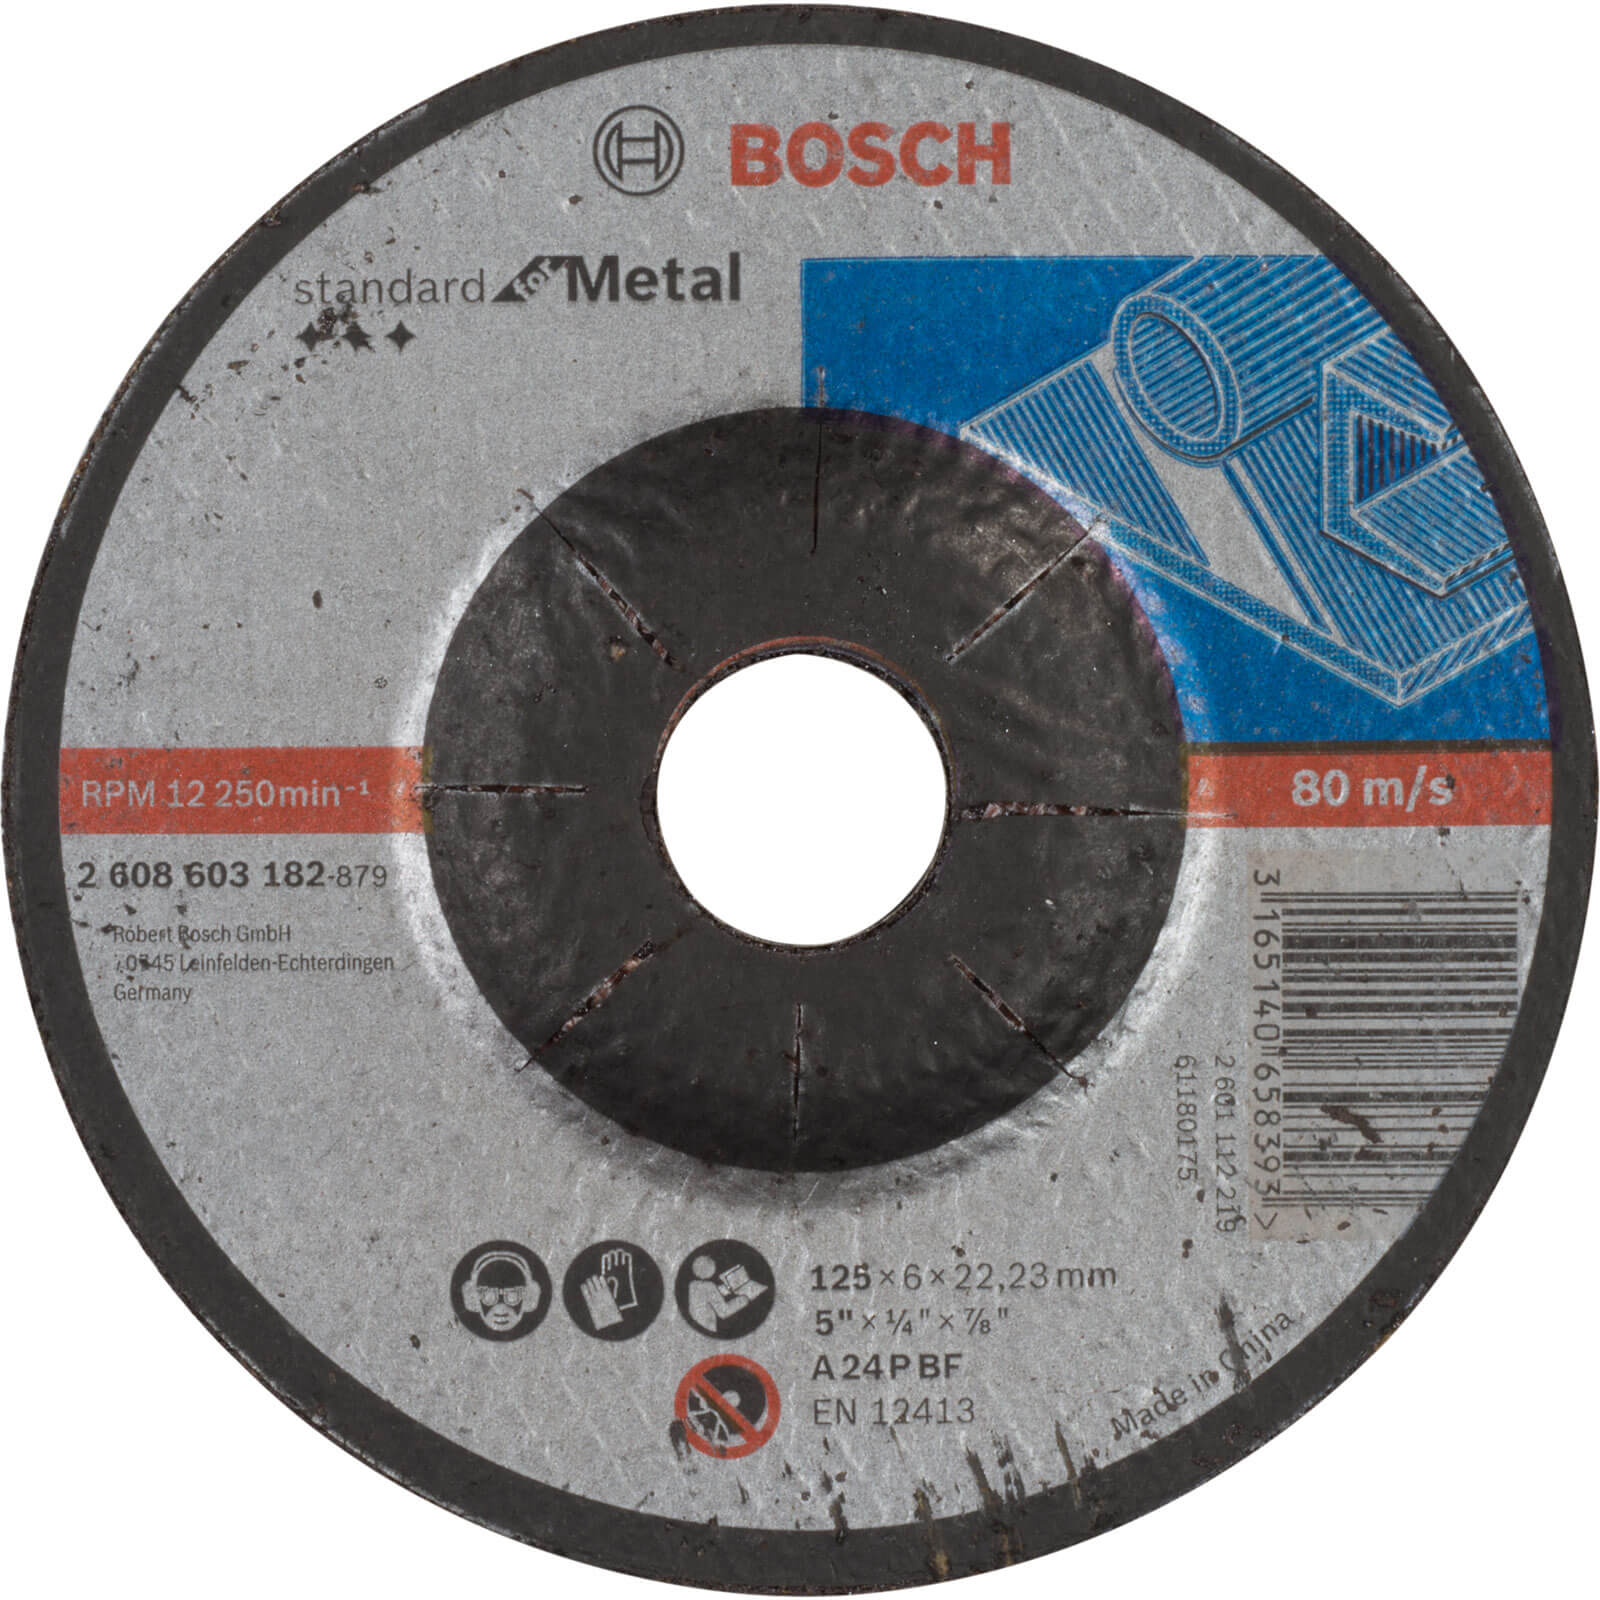 Photos - Cutting Disc Bosch Standard Depressed Centre Metal Grinding Disc 125mm 6mm 22mm 2608603 